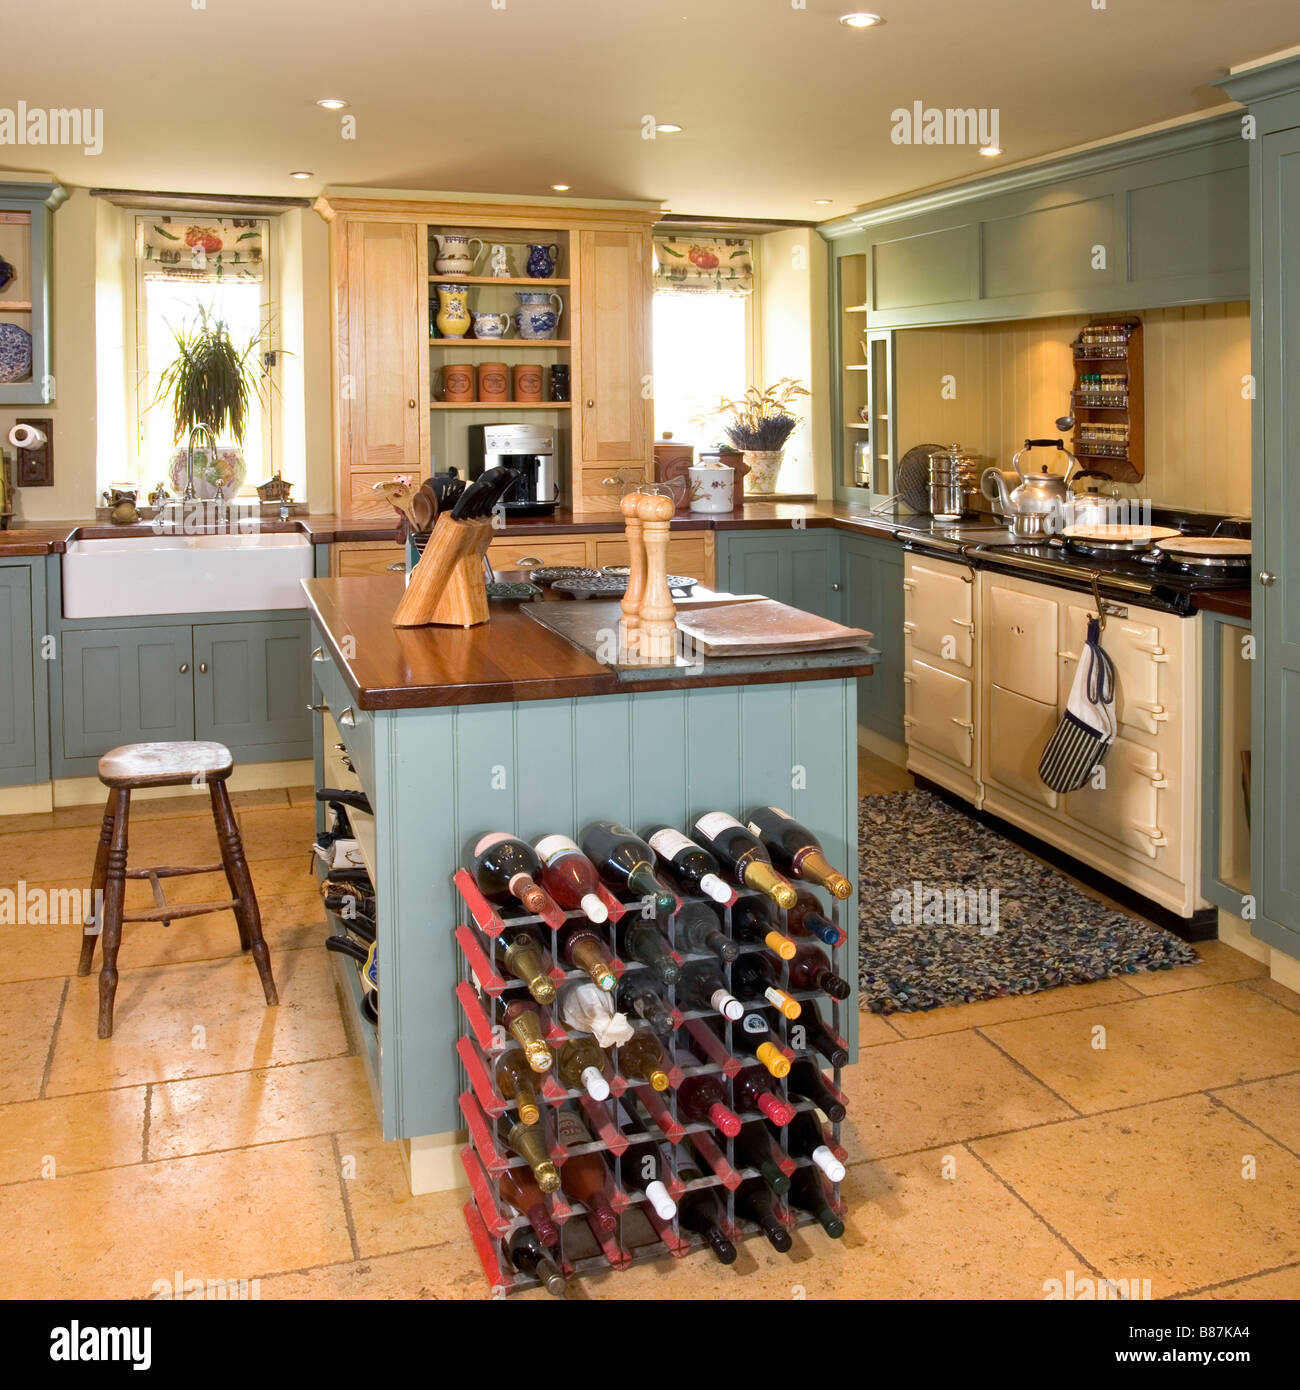 UK. A house interior, kitchen. Stock Photo